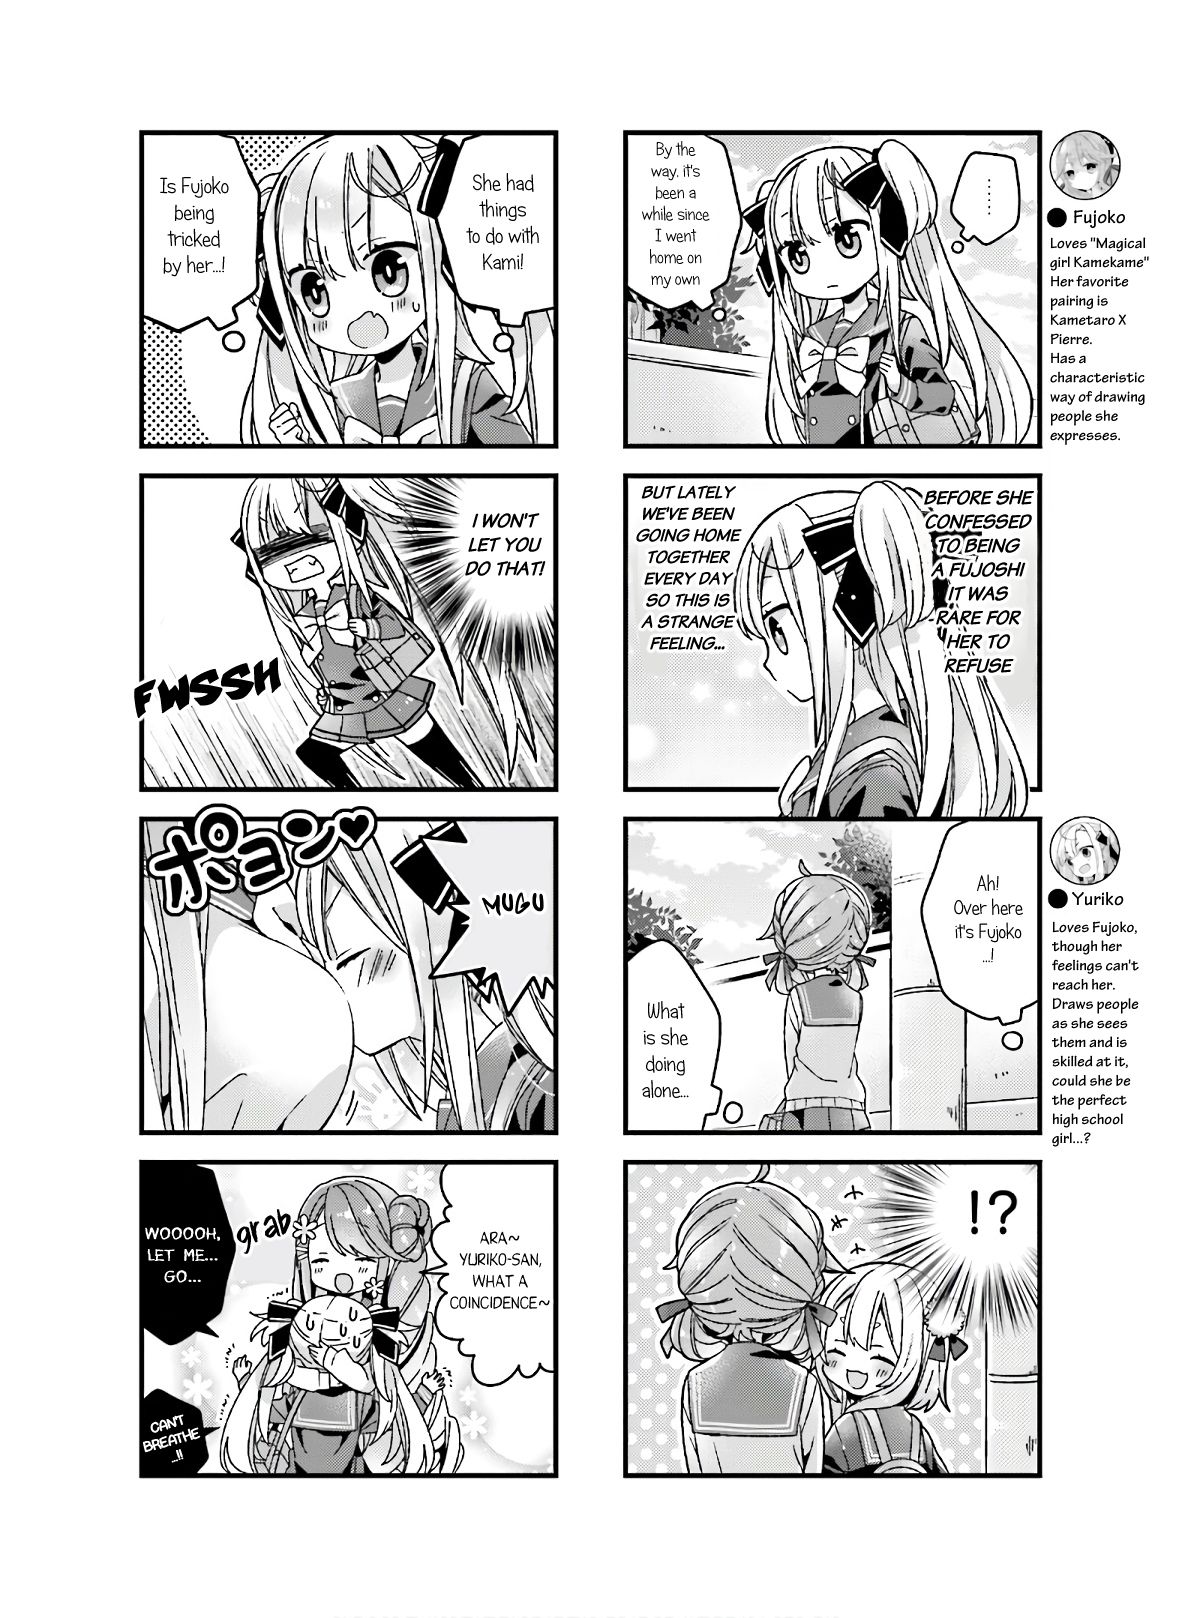 Fujoko to Yuriko - chapter 13 - #2